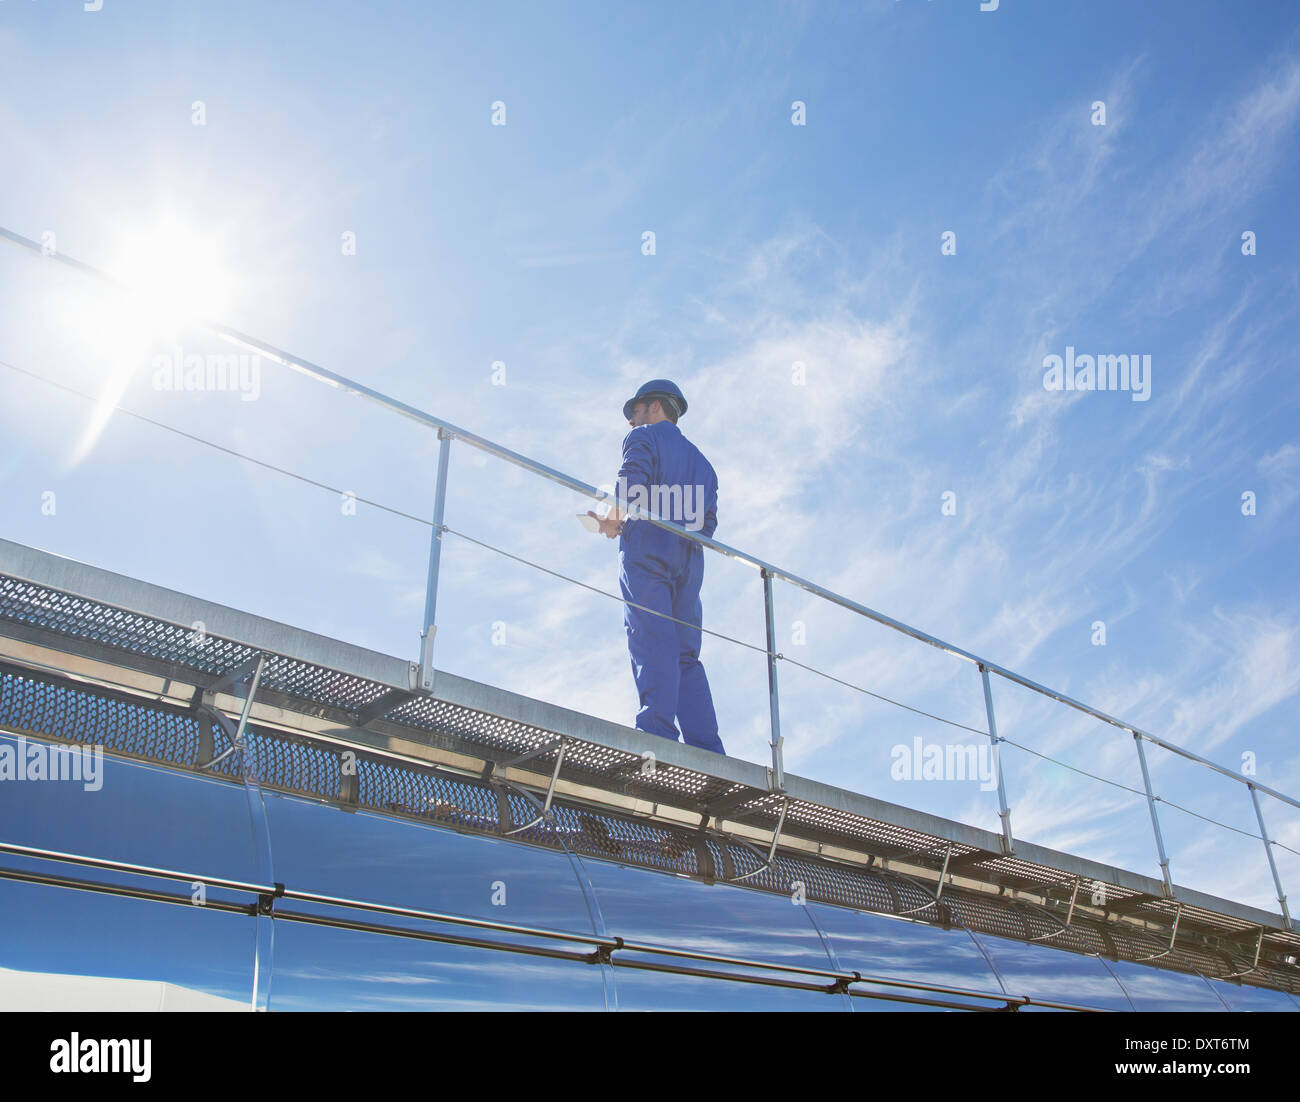 Worker on platform Stock Photo